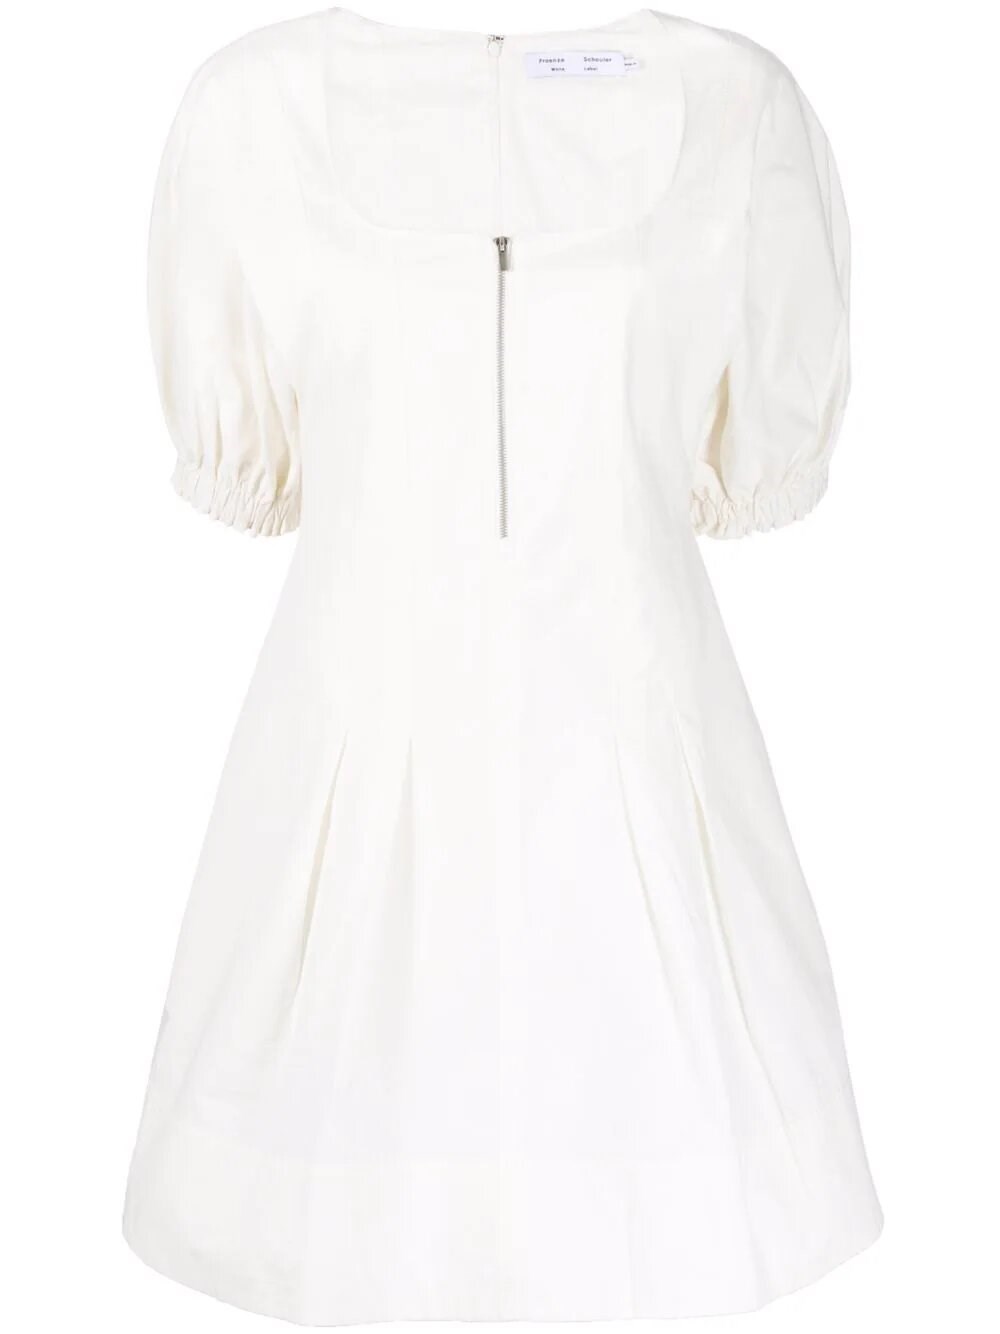 PROENZA SCHOULER WHITE LABEL PUFF SLEEVE COTTON DRESS